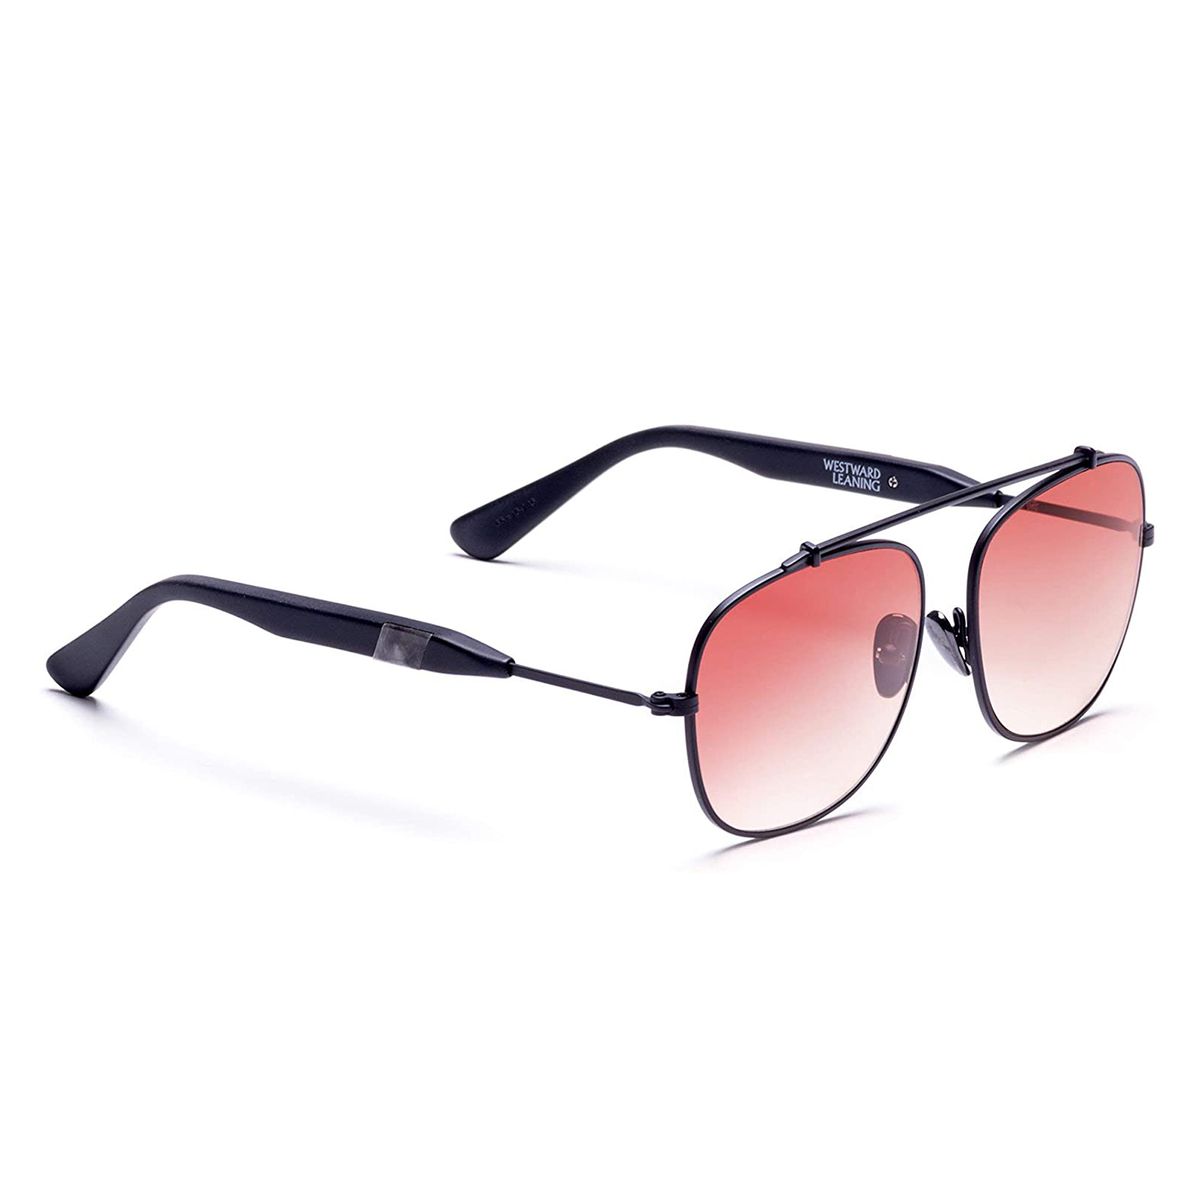 Sunglasses by Westward Leaning